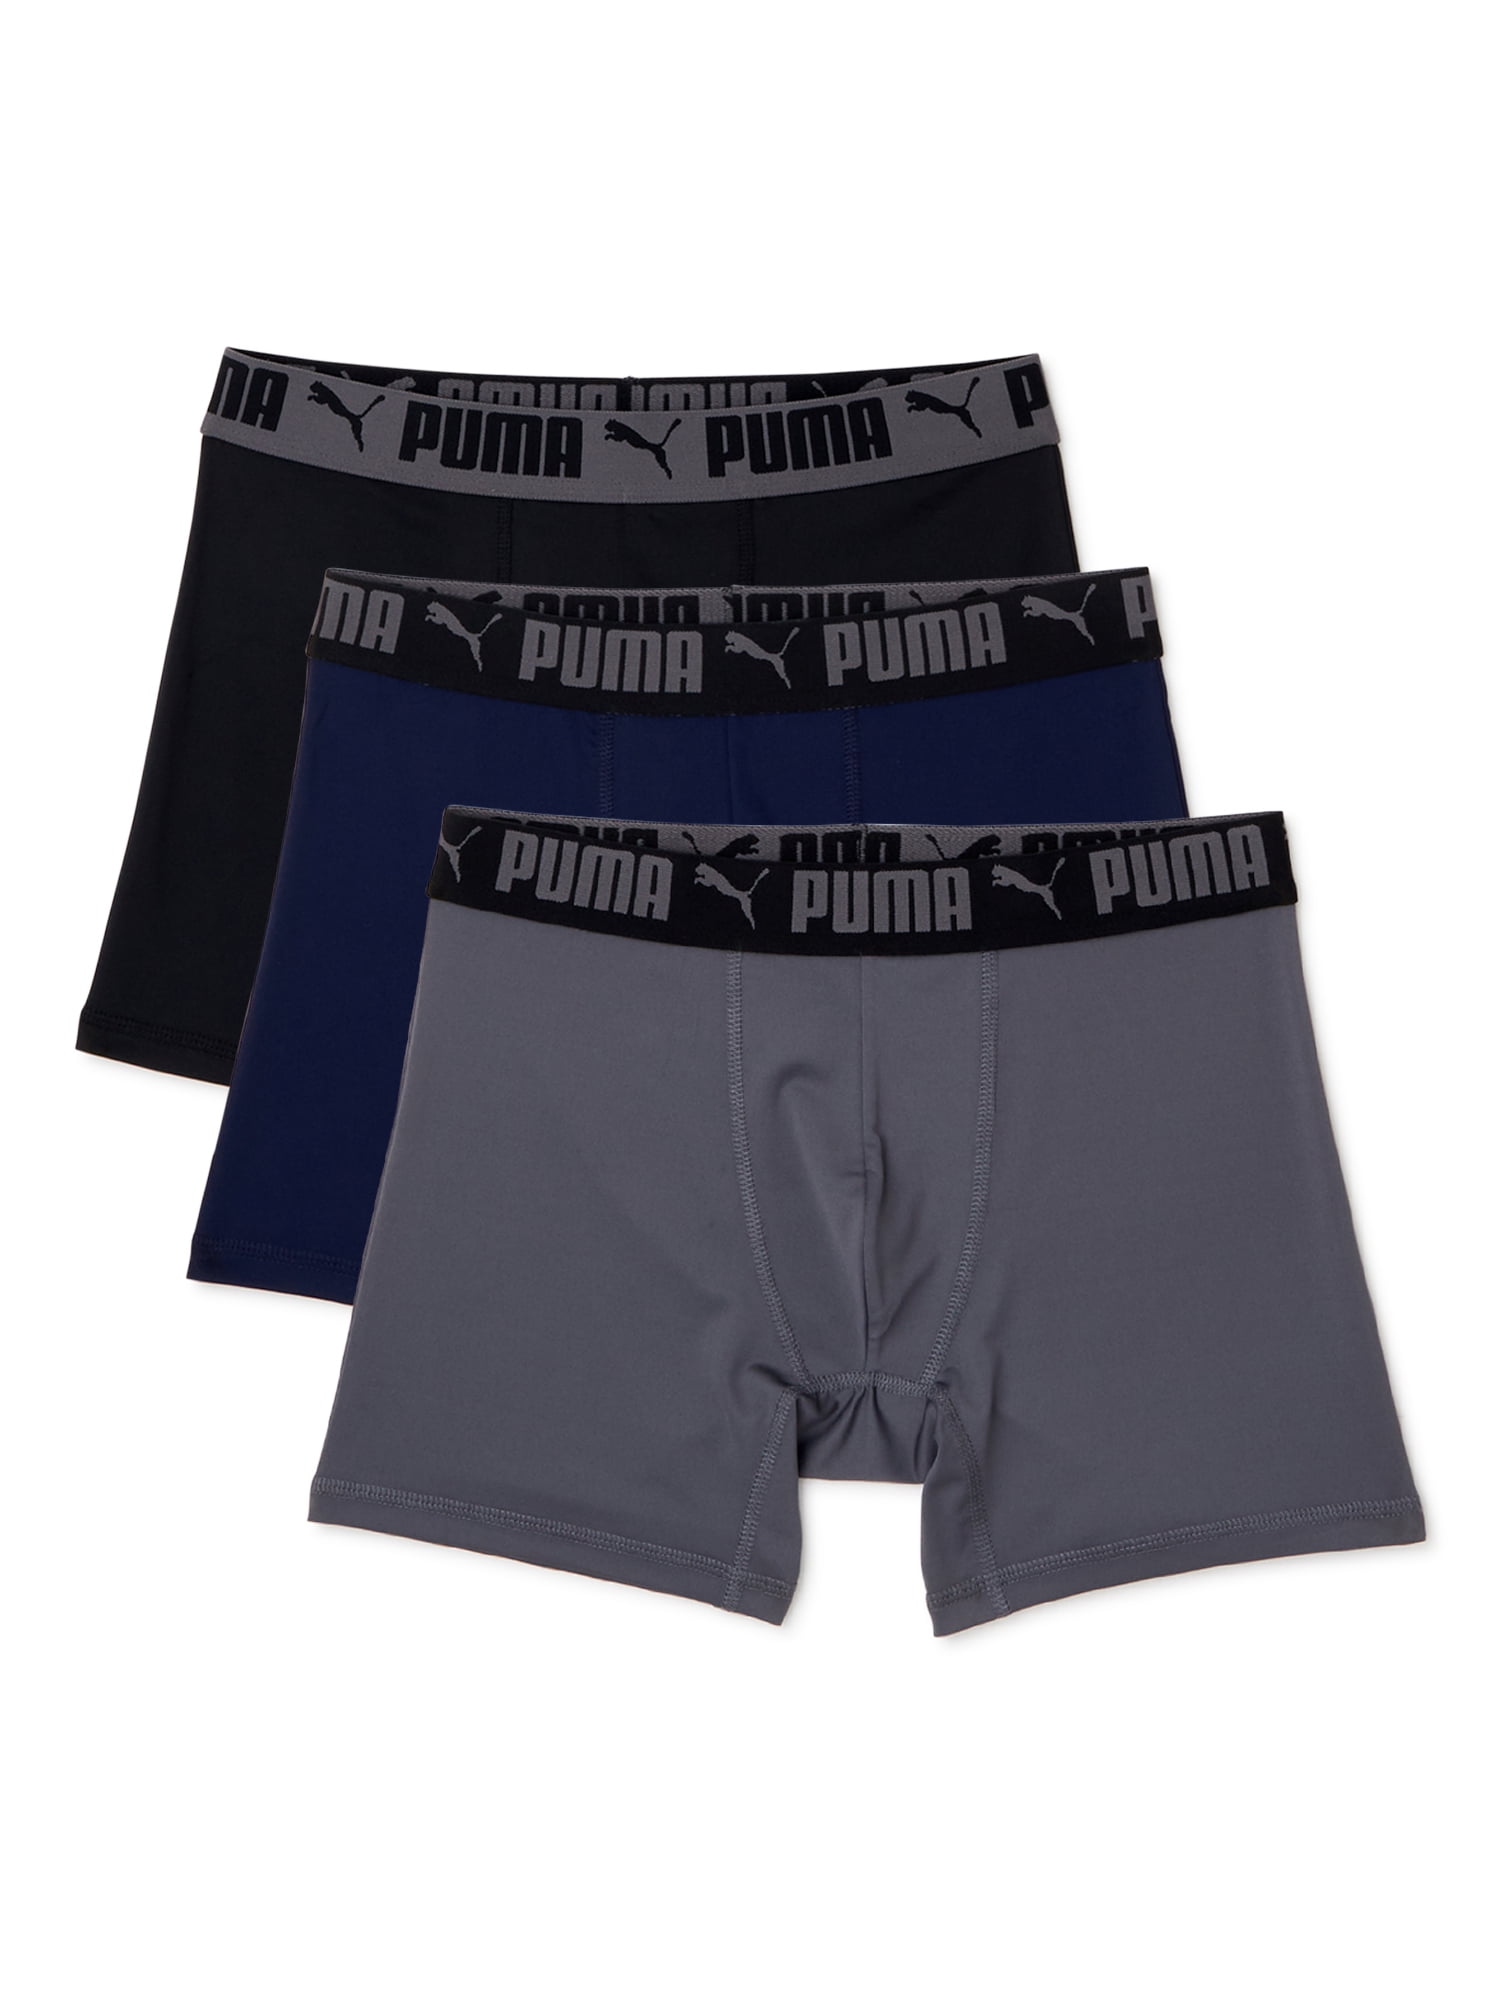 Puma Underwear, Puma Boxers, Puma Sports Bra & more